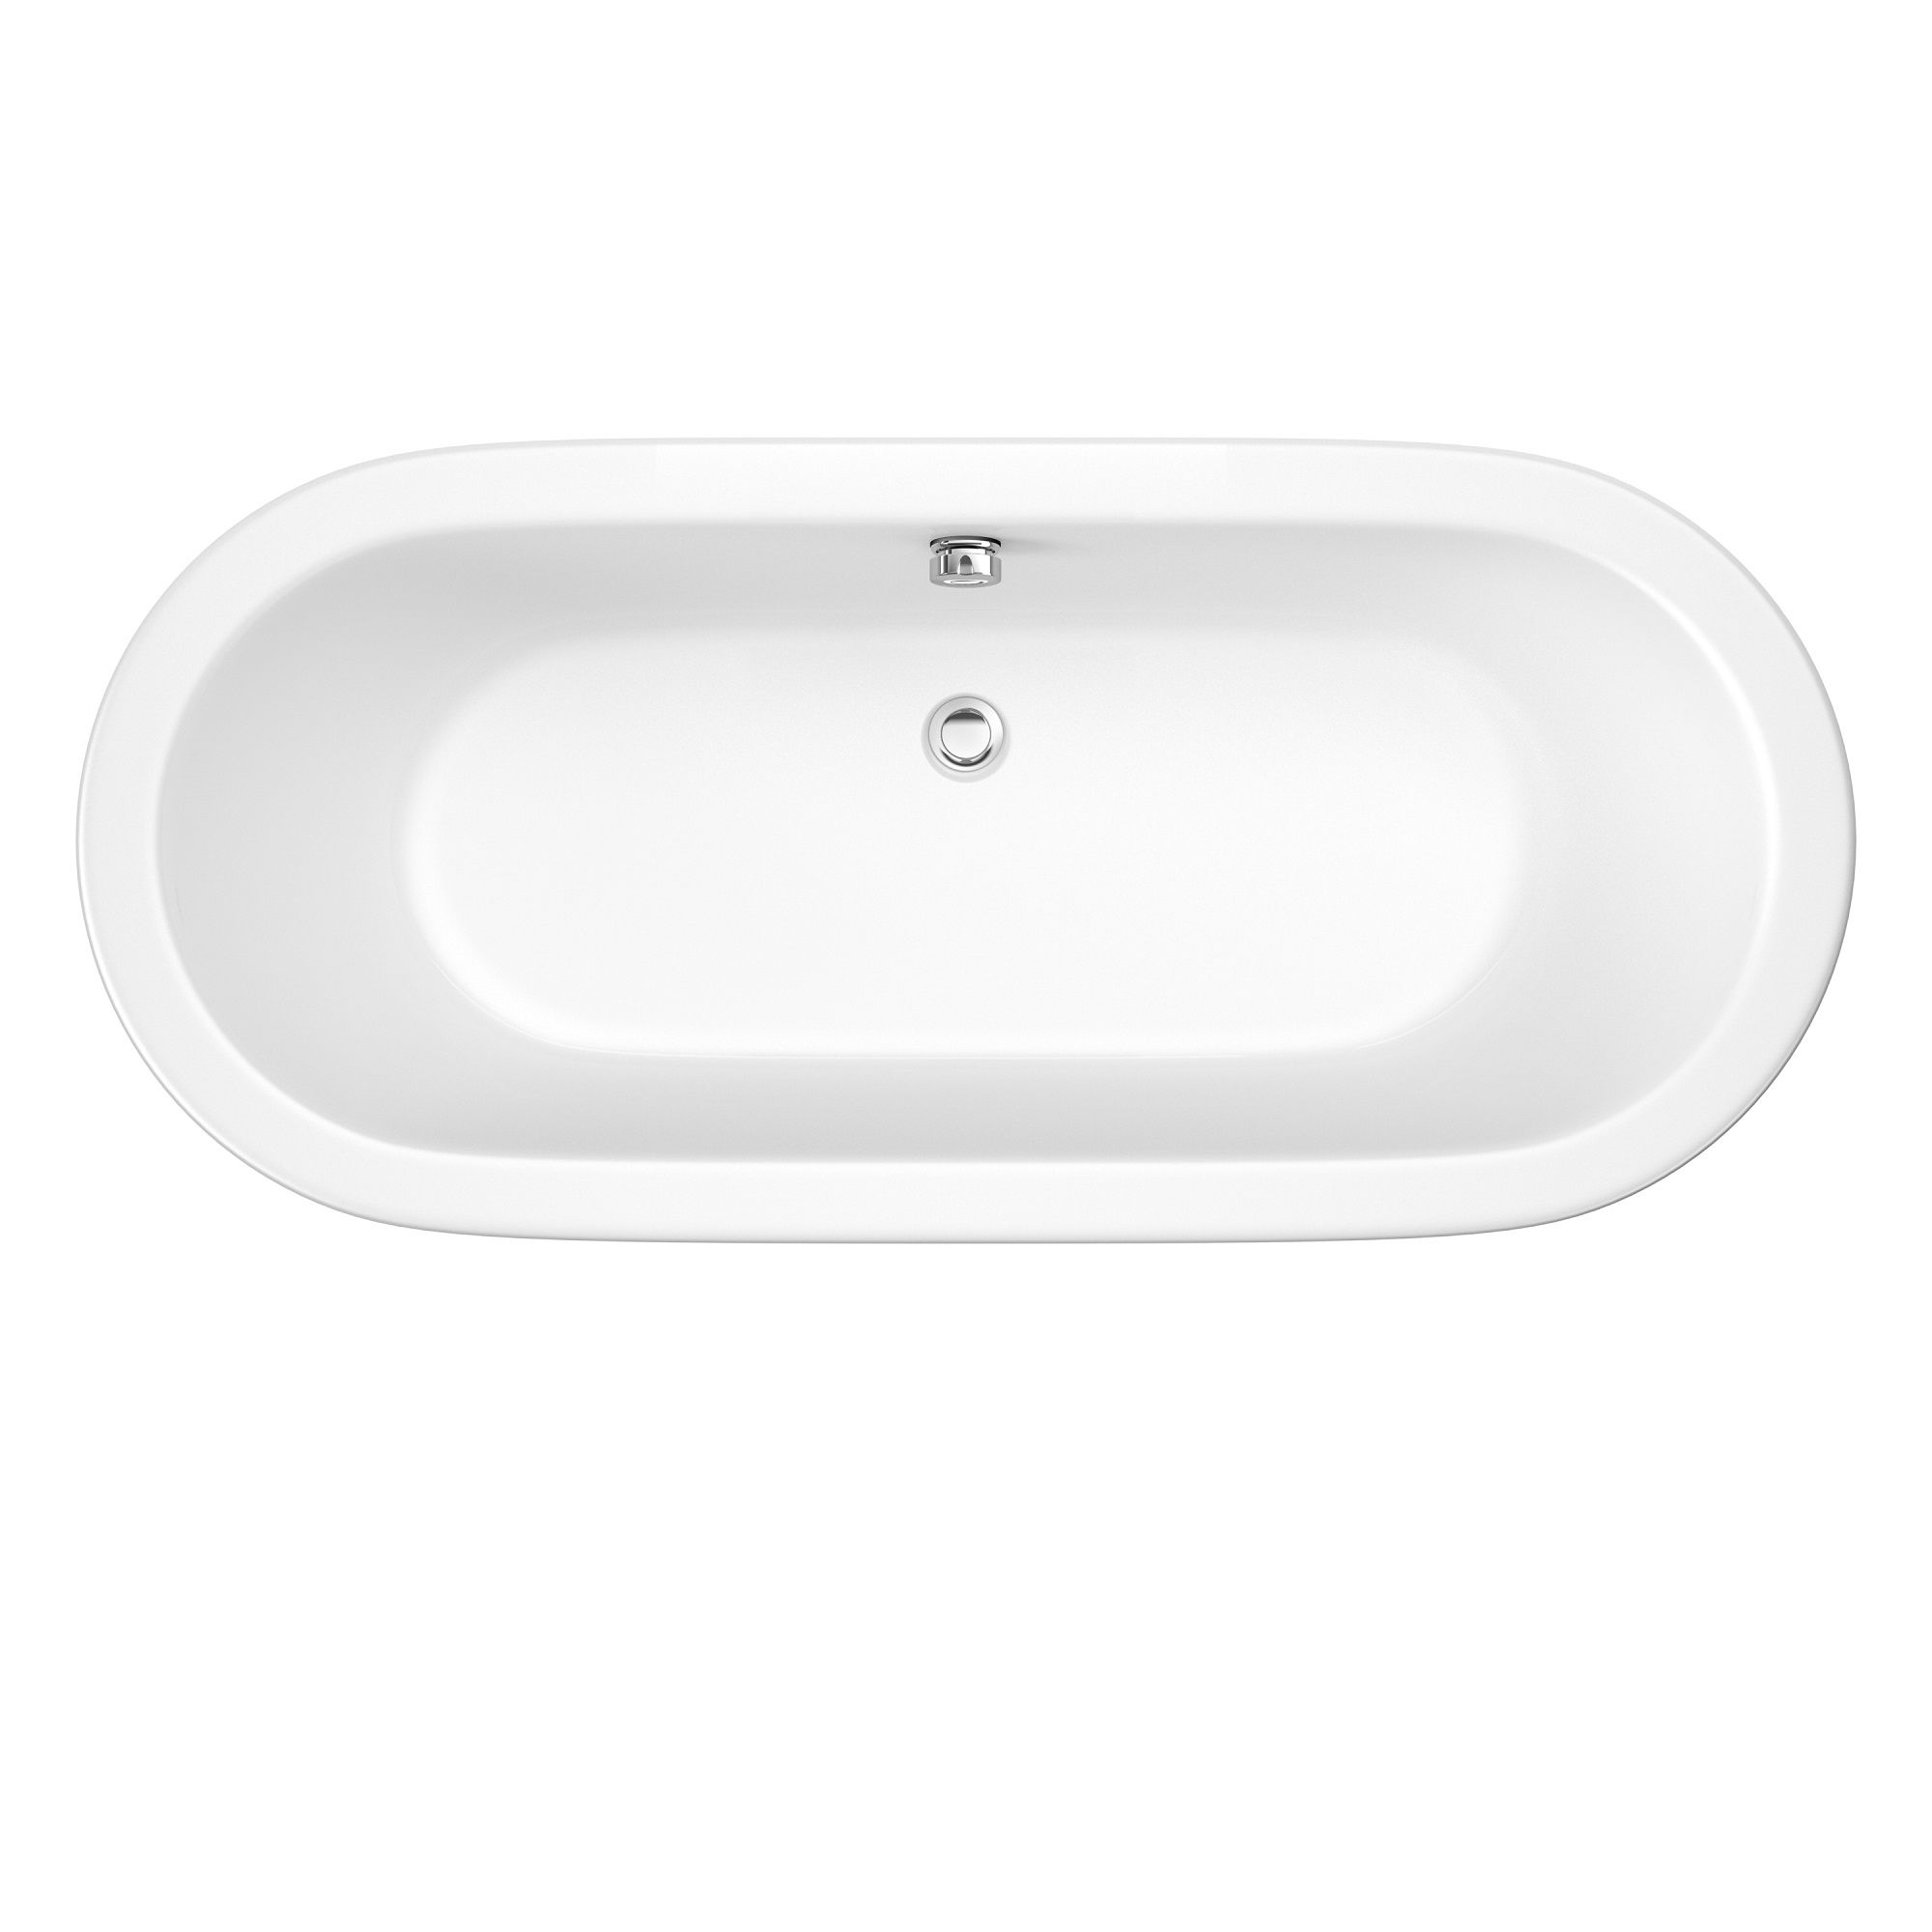 Cooke & Lewis Savoy White Acrylic Oval Freestanding Bath (L)1700mm (W)755mm